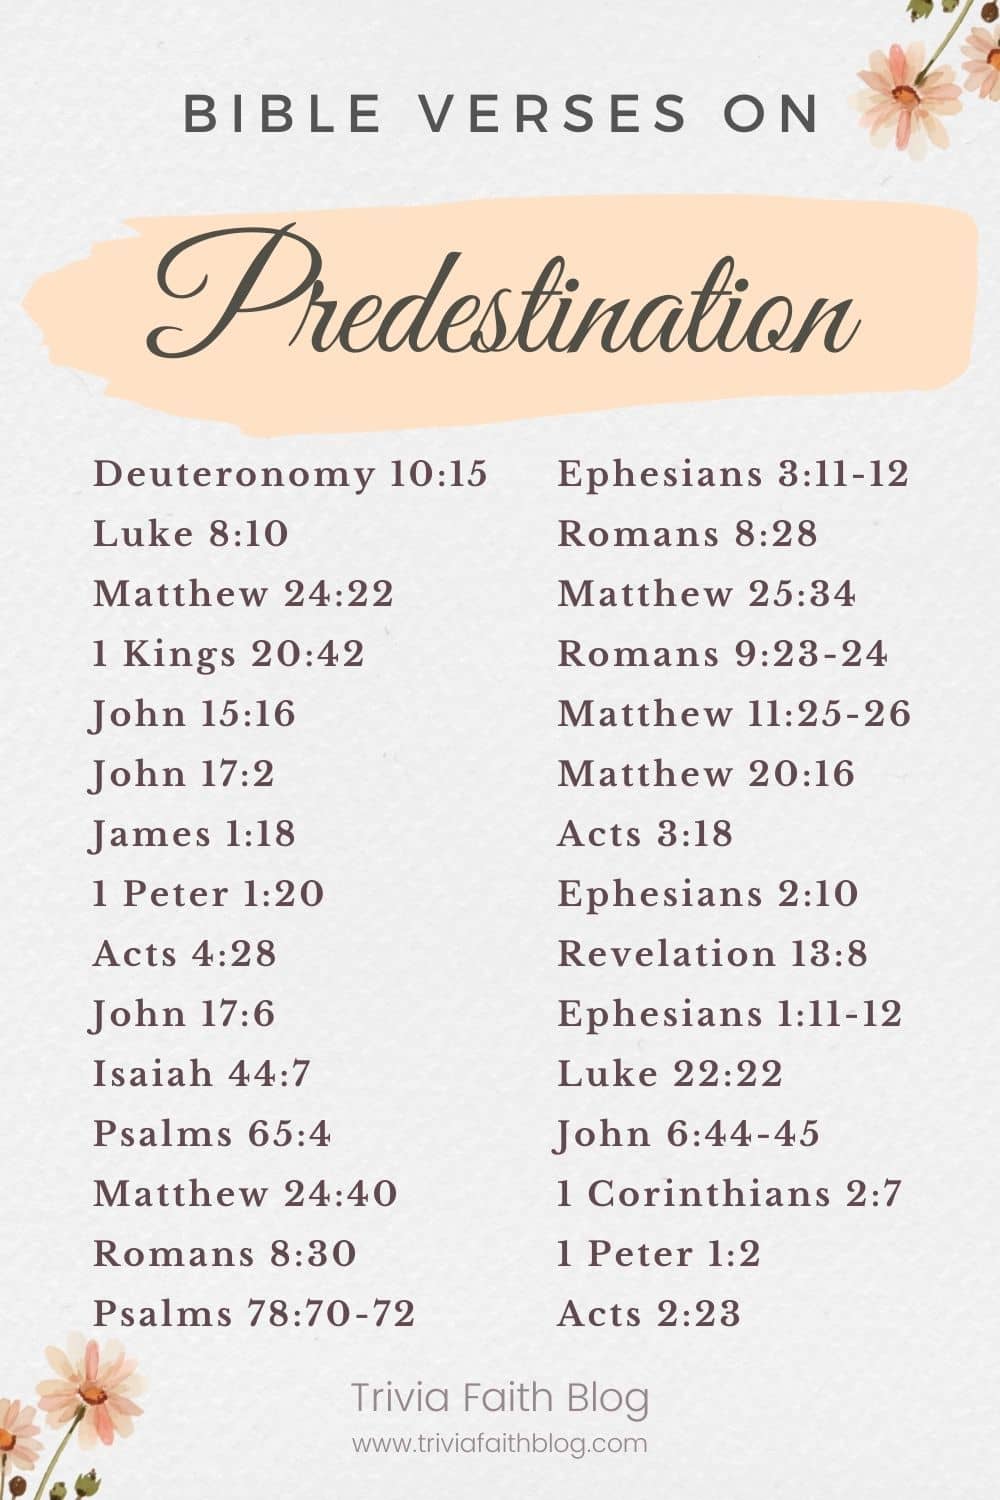 Bible verses about predestination kjv